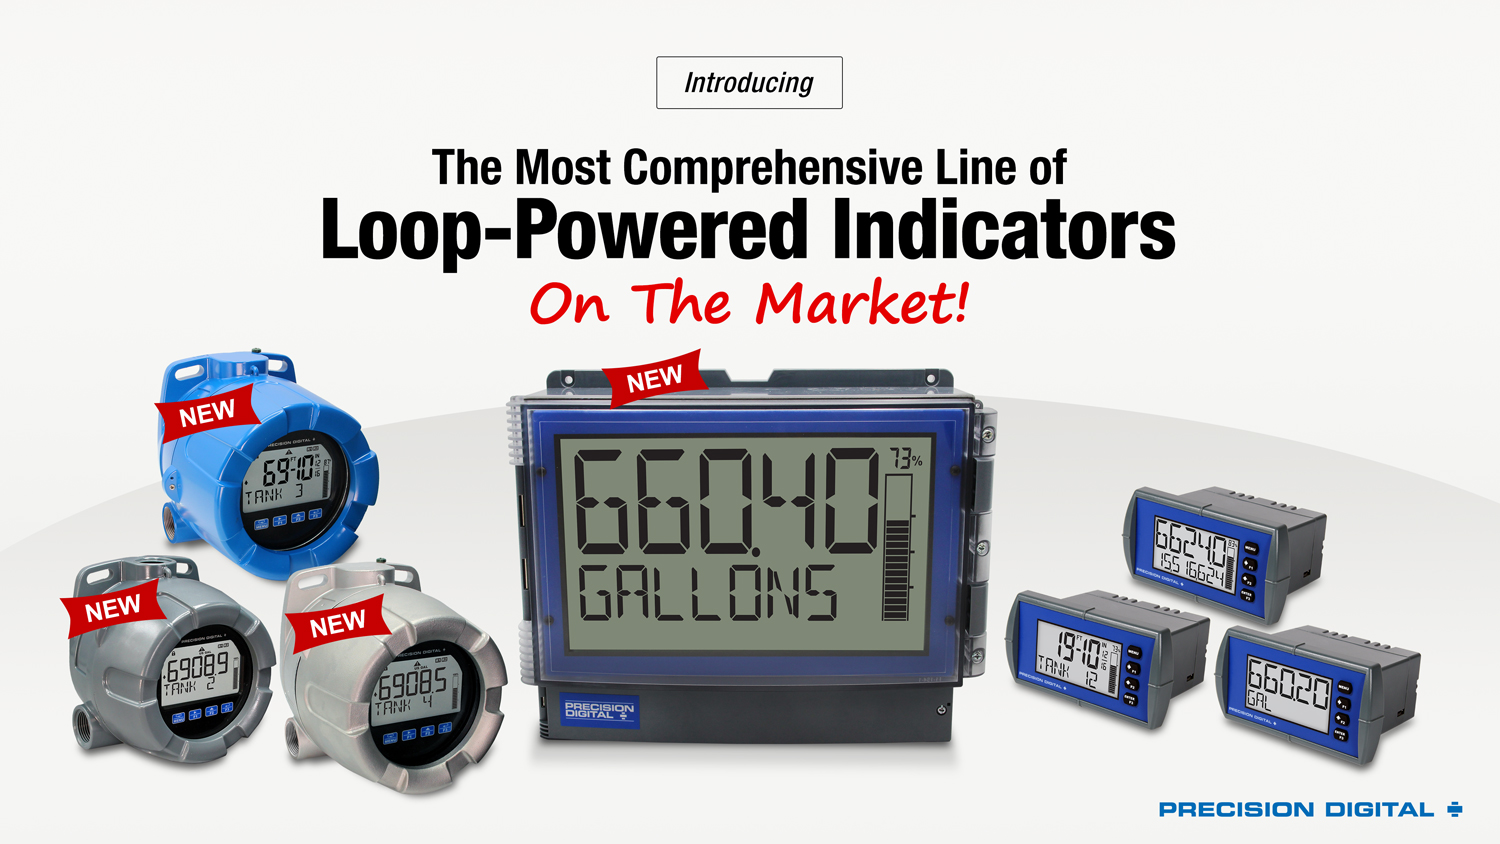 Introducing The Most Comprehensive Line of Loop-Powered Meters